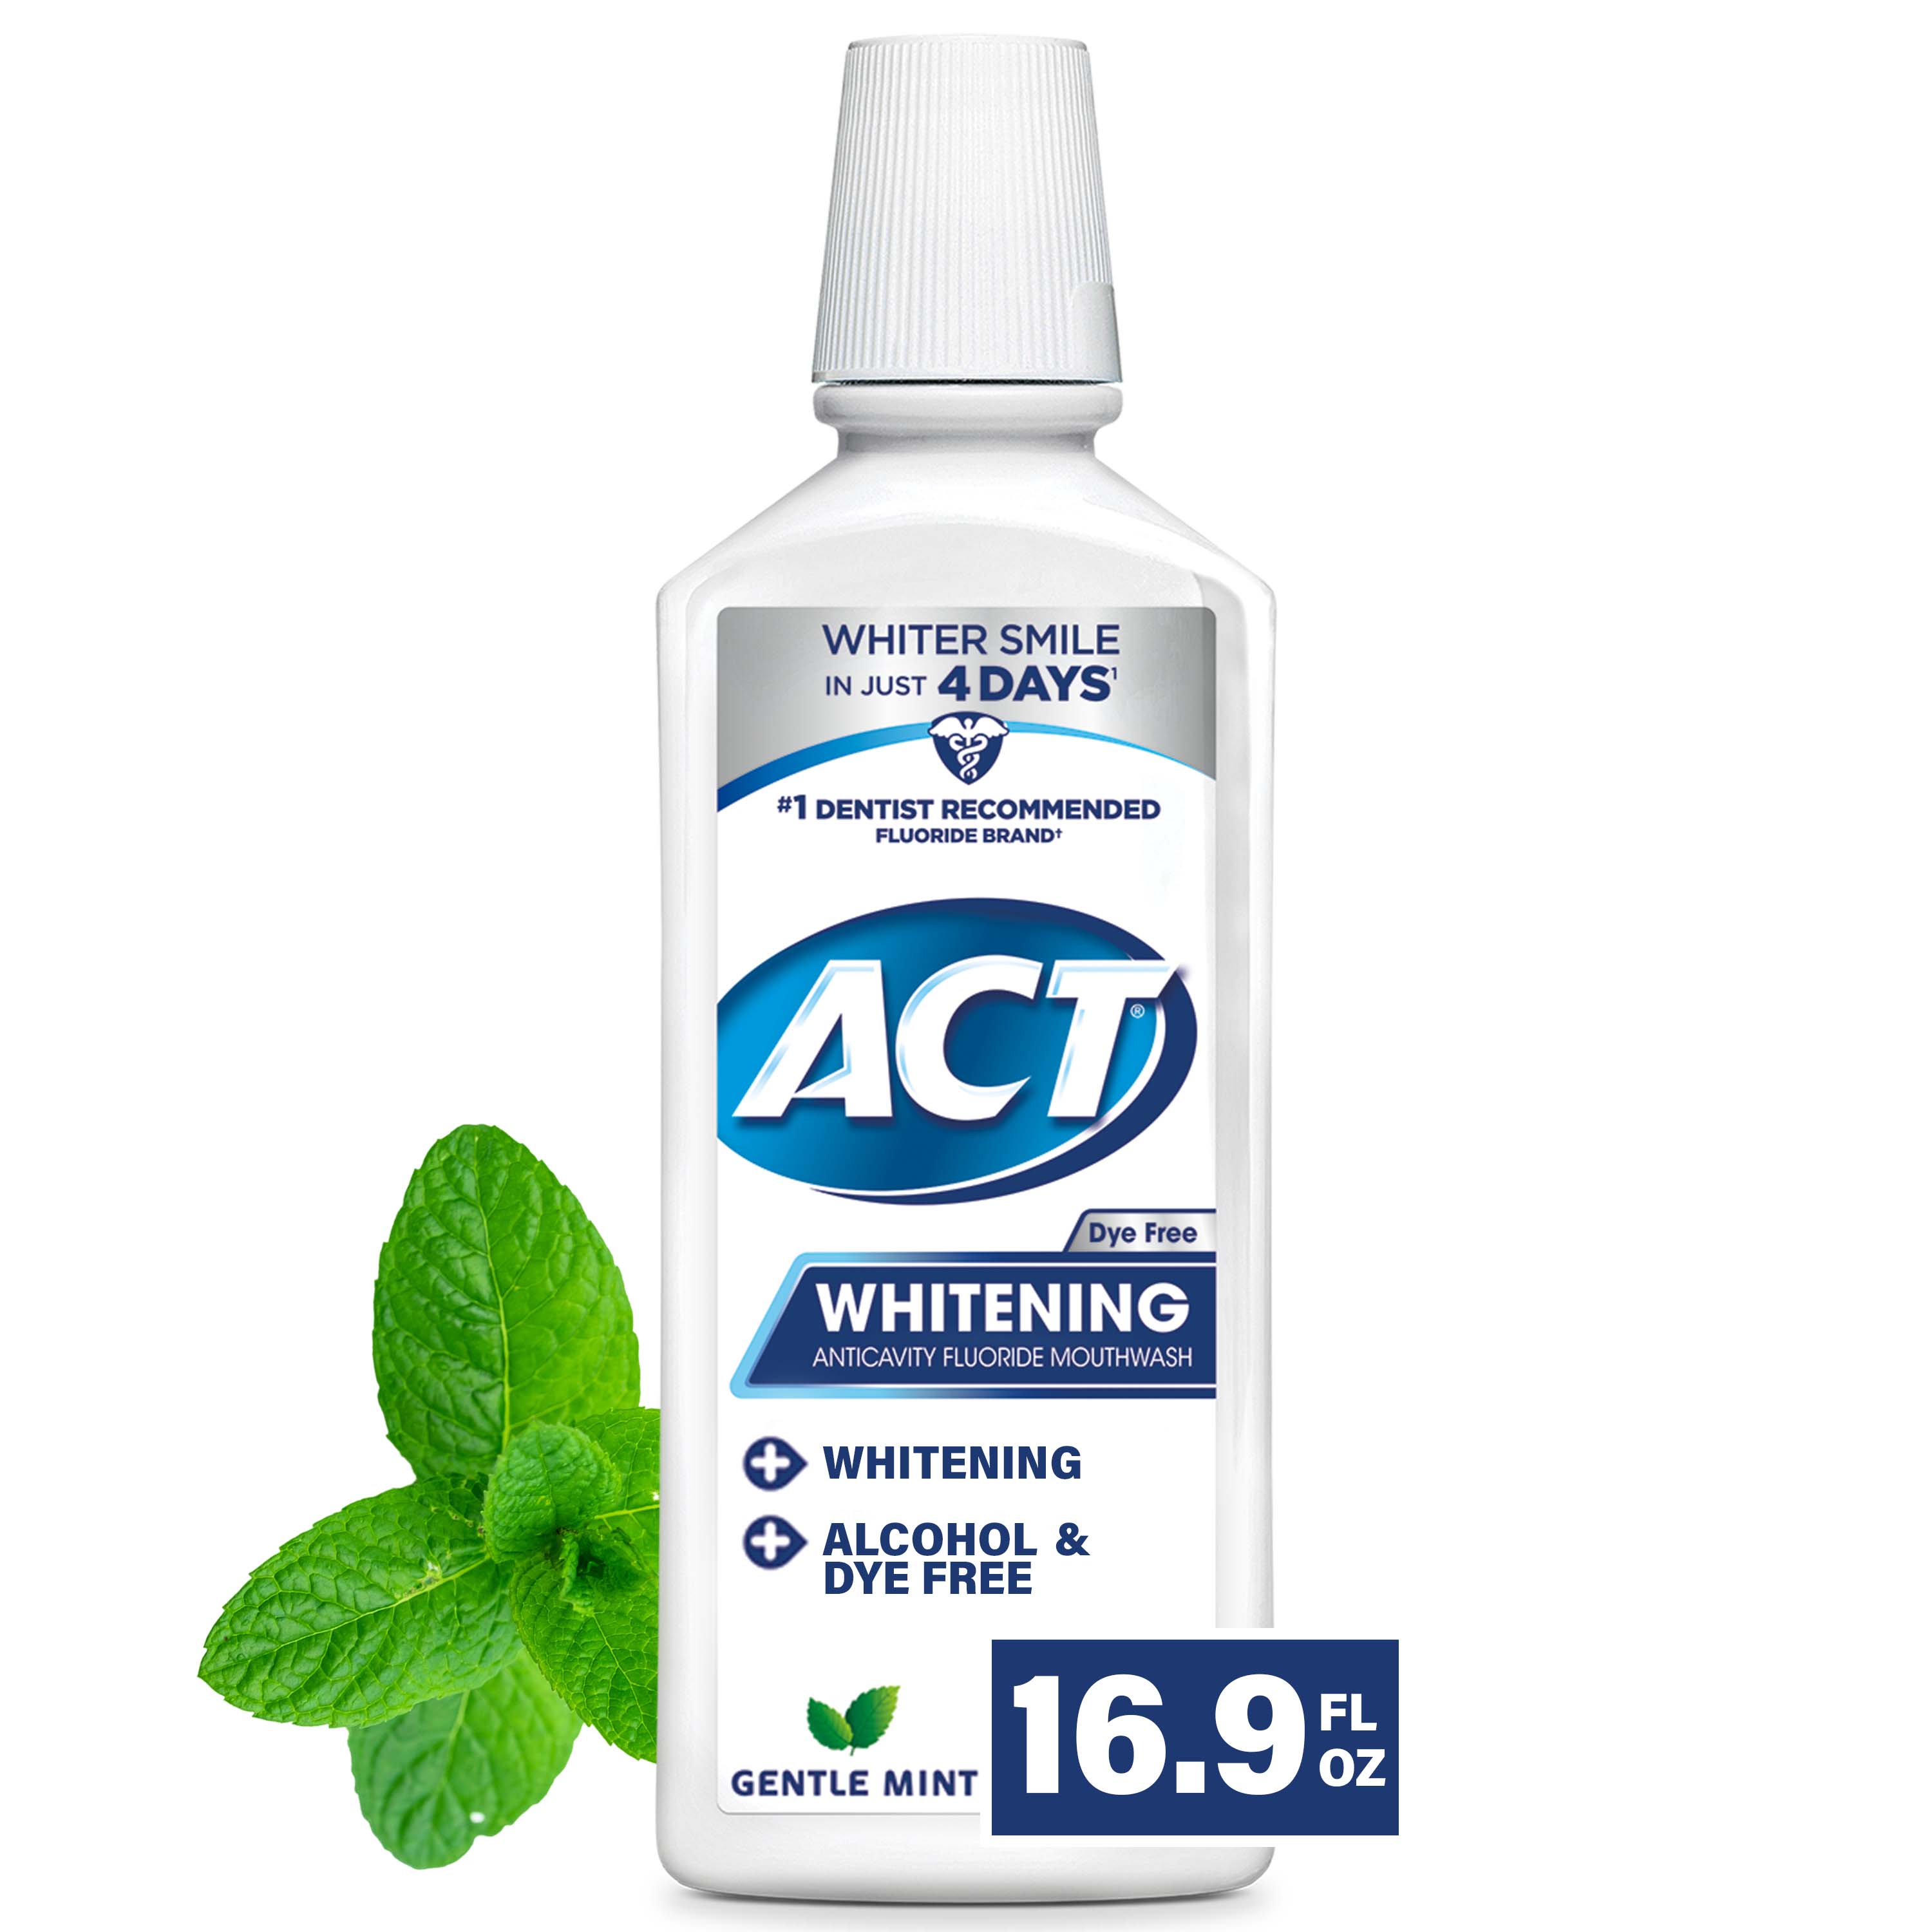 ACT Whitening + Anticavity Fluoride Mouthwash, Gentle Mint, Alcohol Free and Dye Free, 16.9 fl. oz. - image 1 of 9